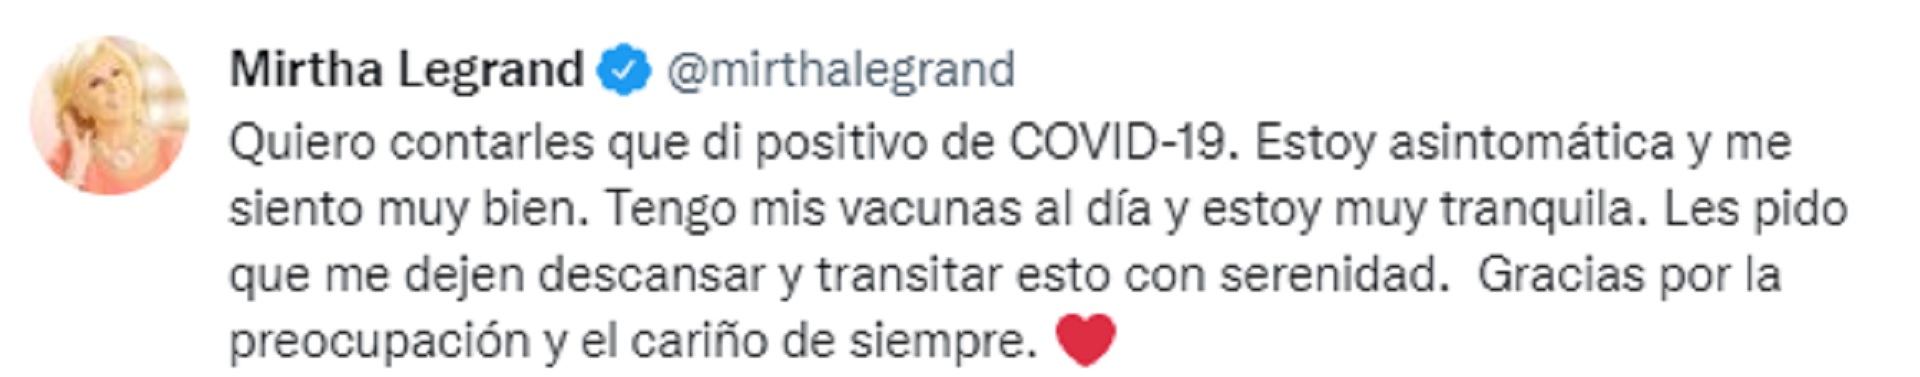 Il tweet di Mirtha Legrand dice che ha il coronavirus